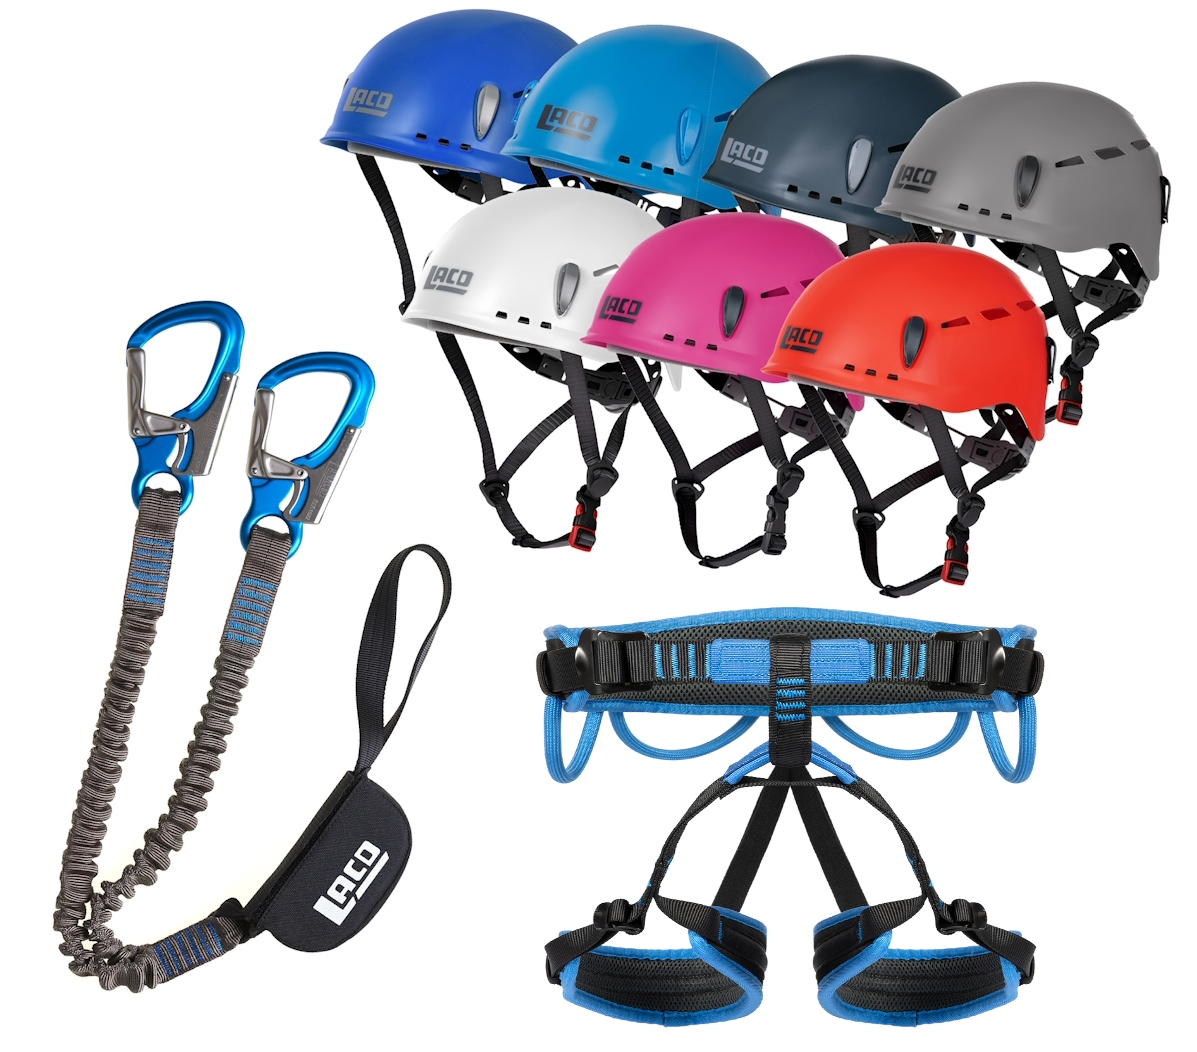 Klettersteigset LACD Pro + Gurt Start 2.0 + Helm Protector 2.0